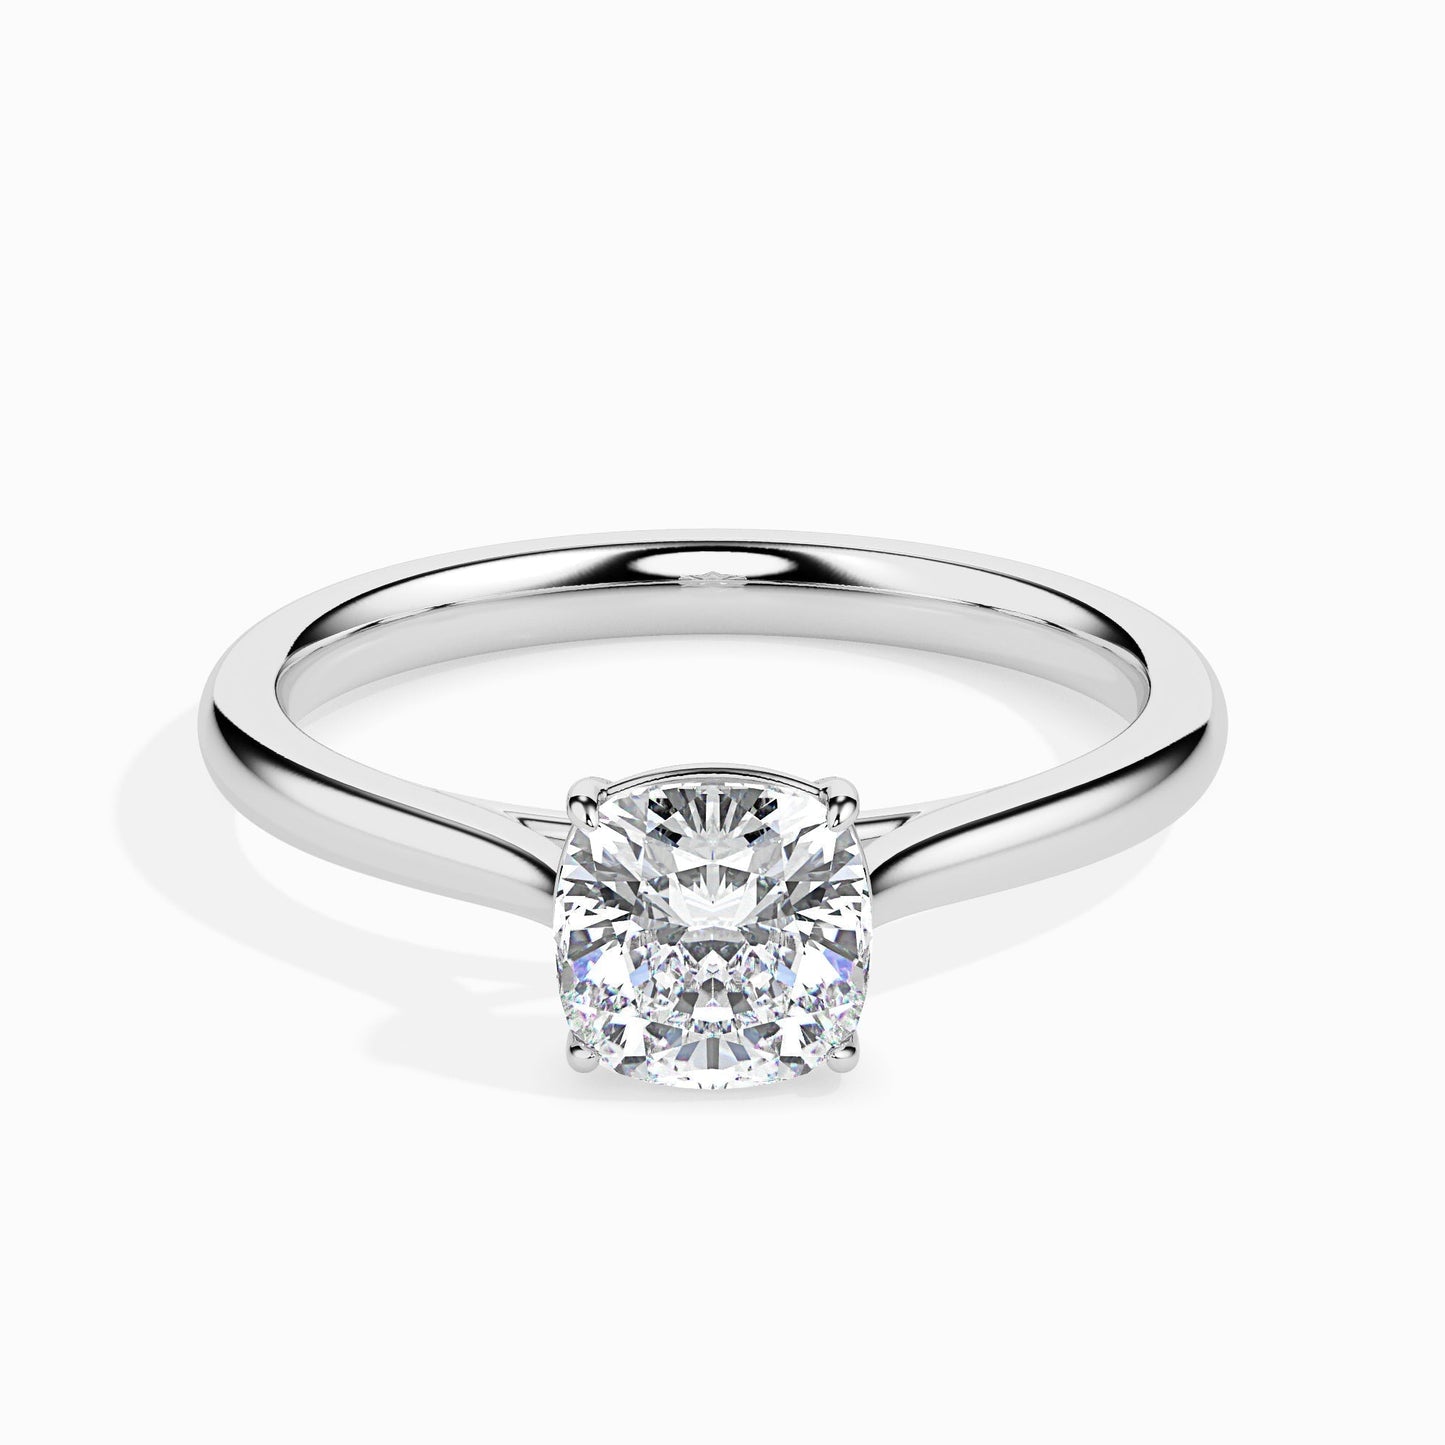 Keyzar · Victoria Beckham's engagement ring